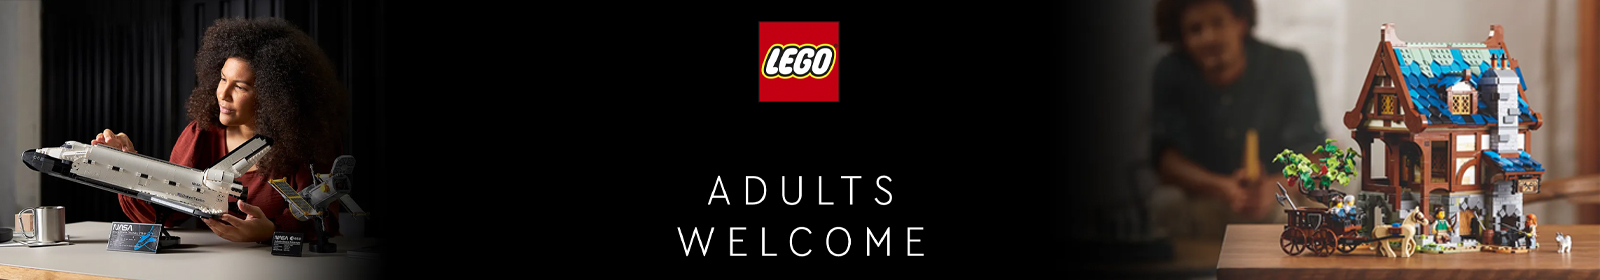 lego welcome adults